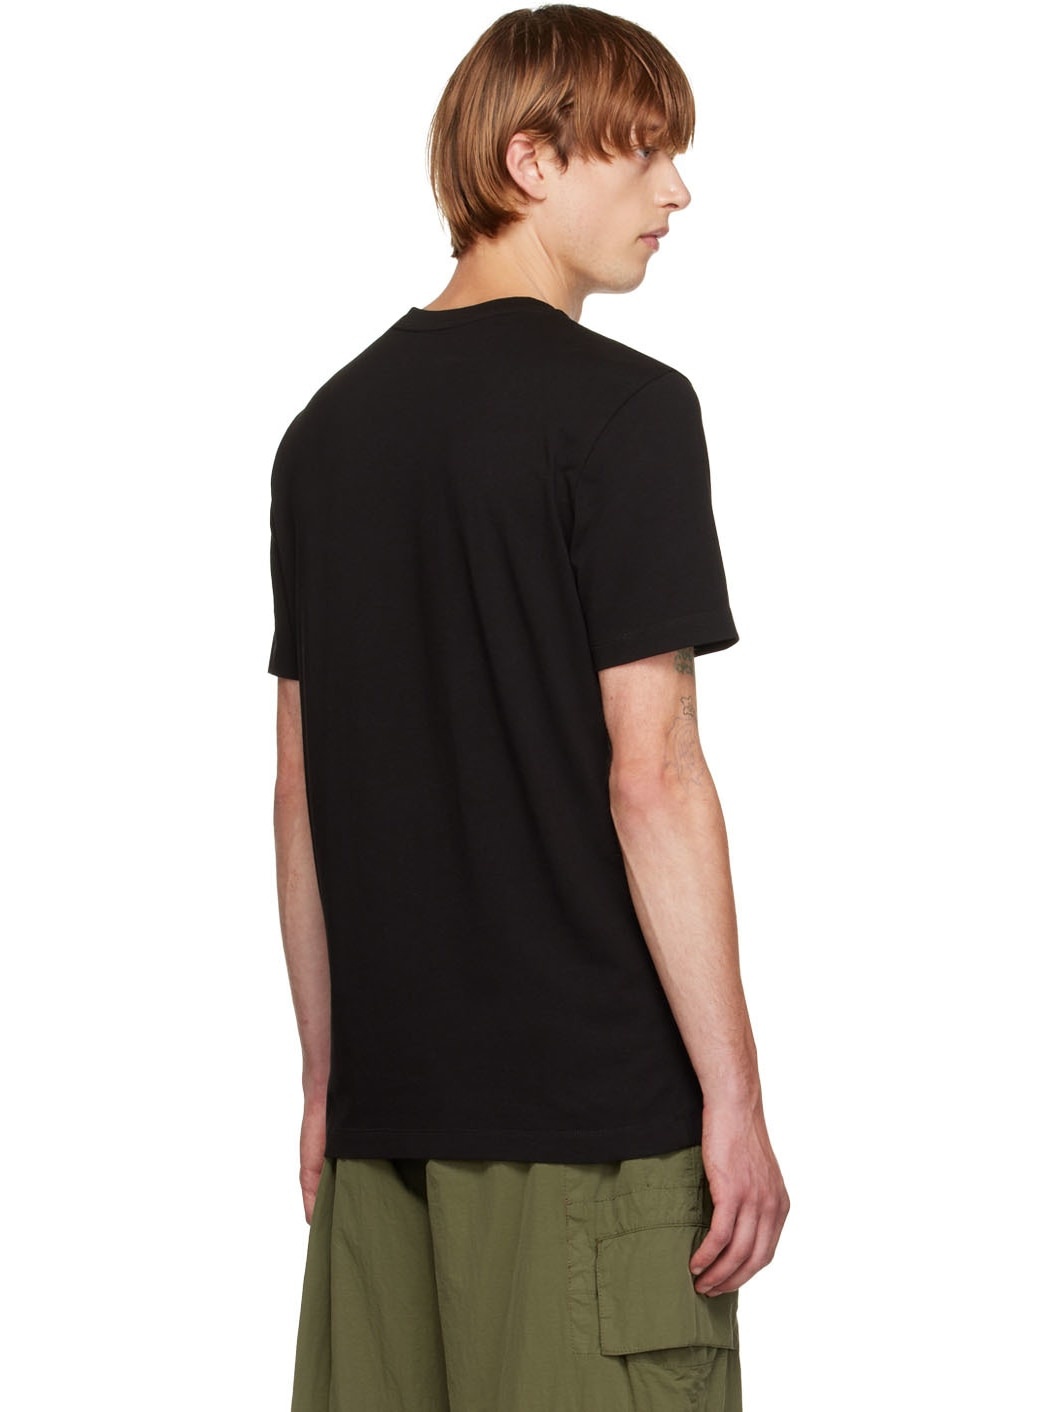 Black Cotton T-Shirt - 3